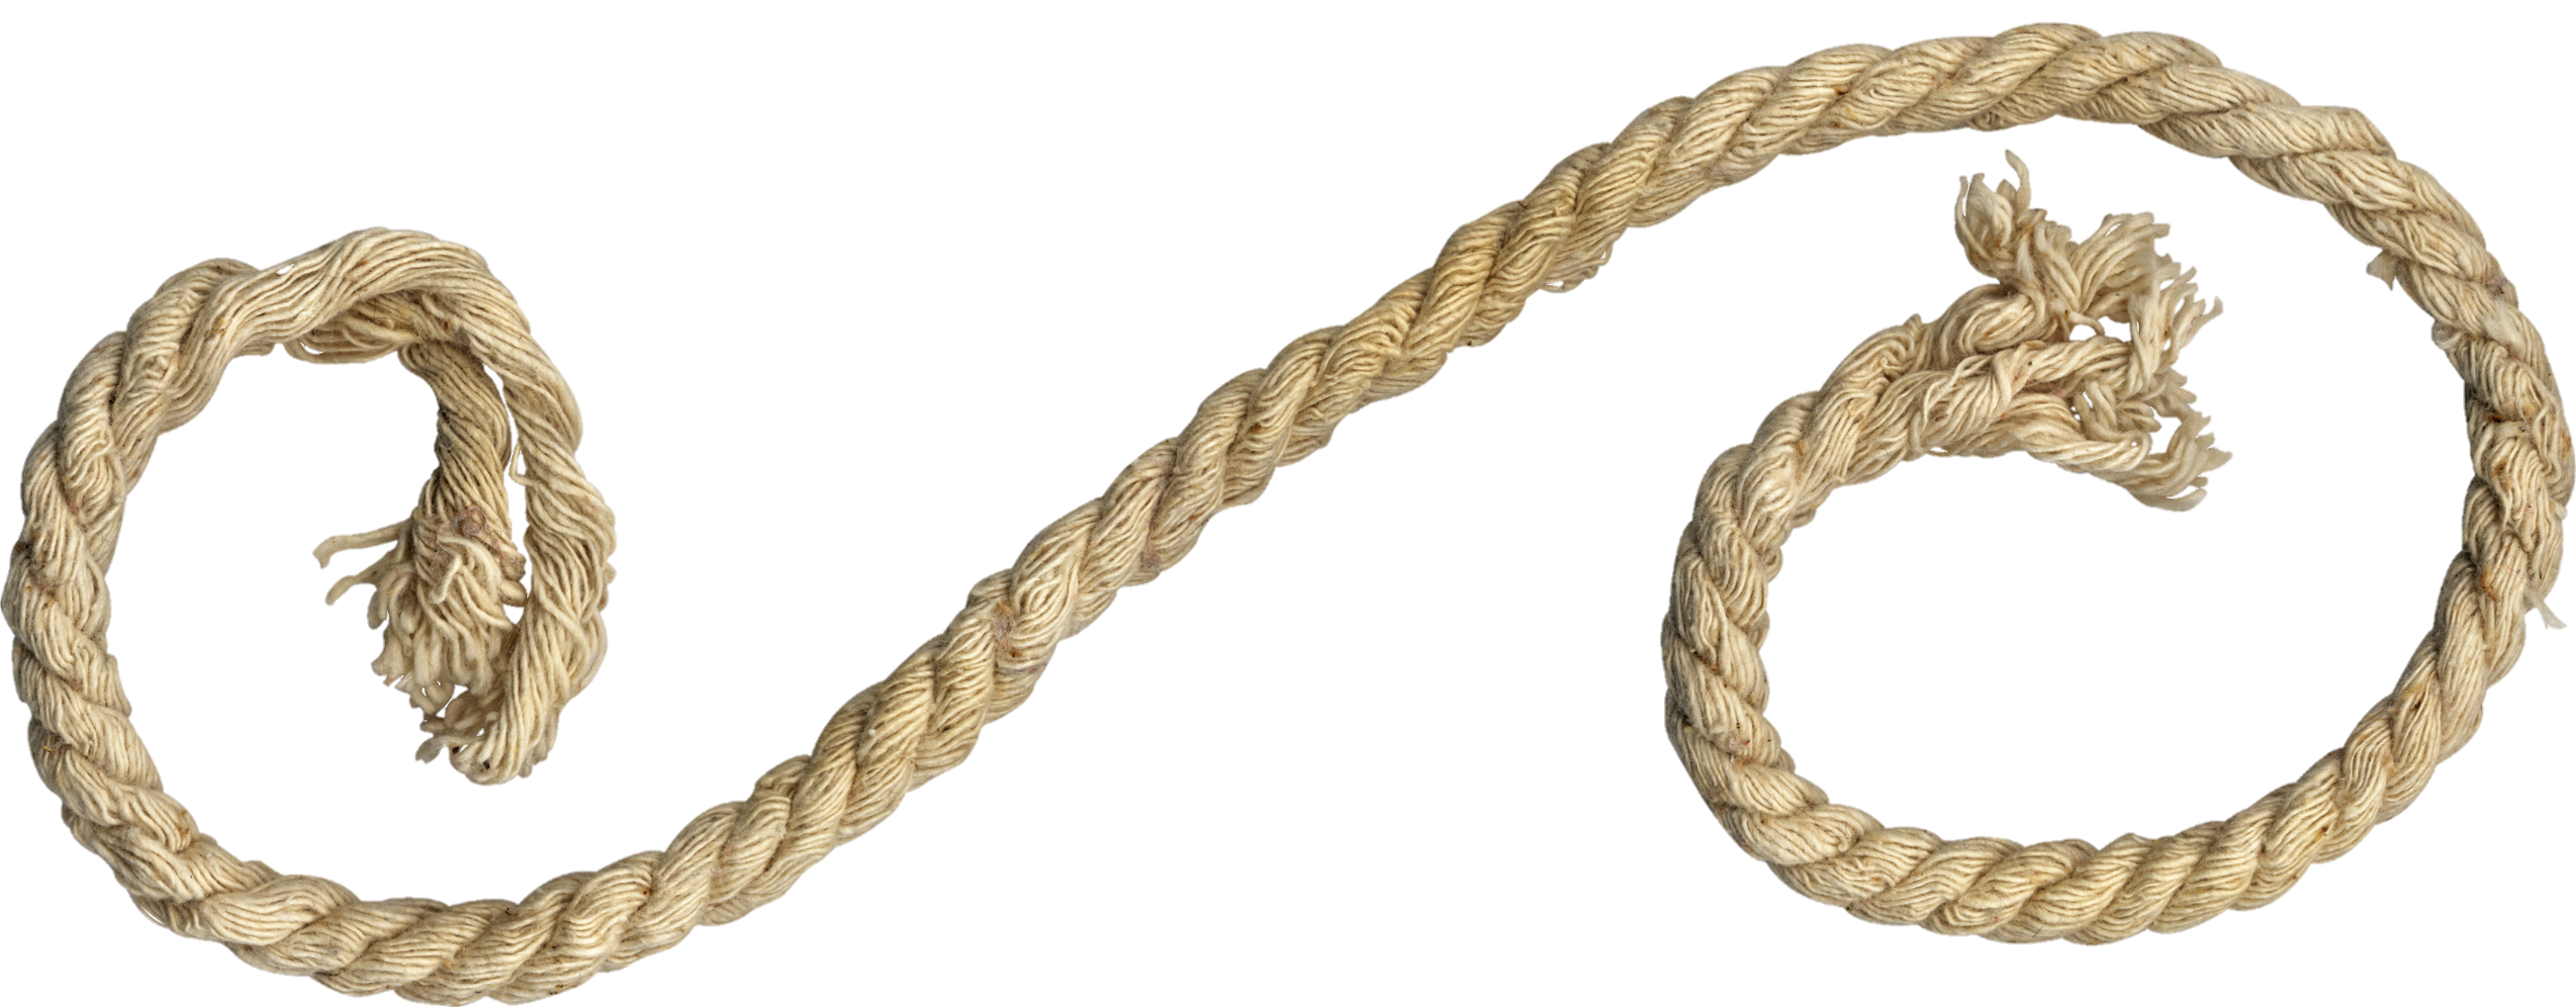 Rope-7